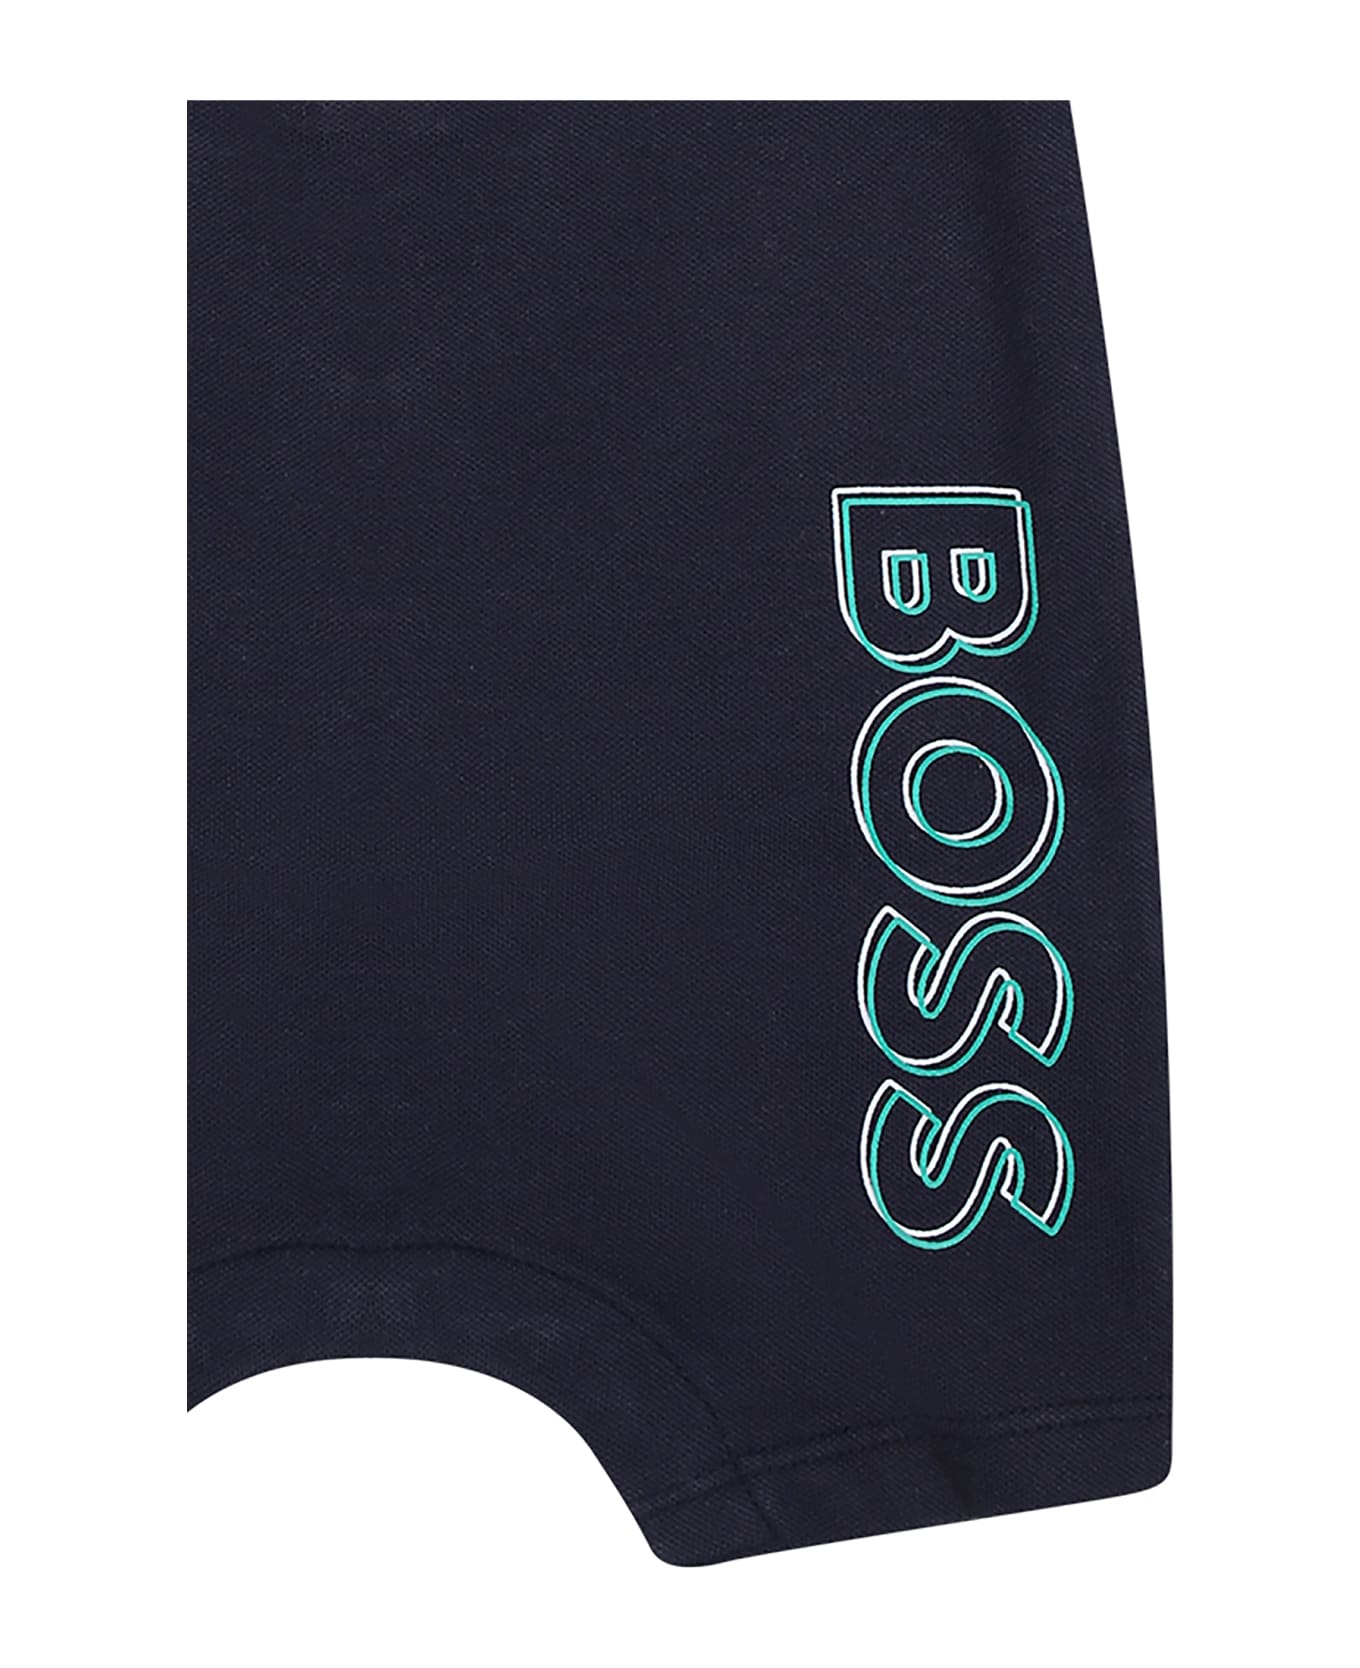 Hugo Boss Blue Romper For Baby Boy With Logo - Blue